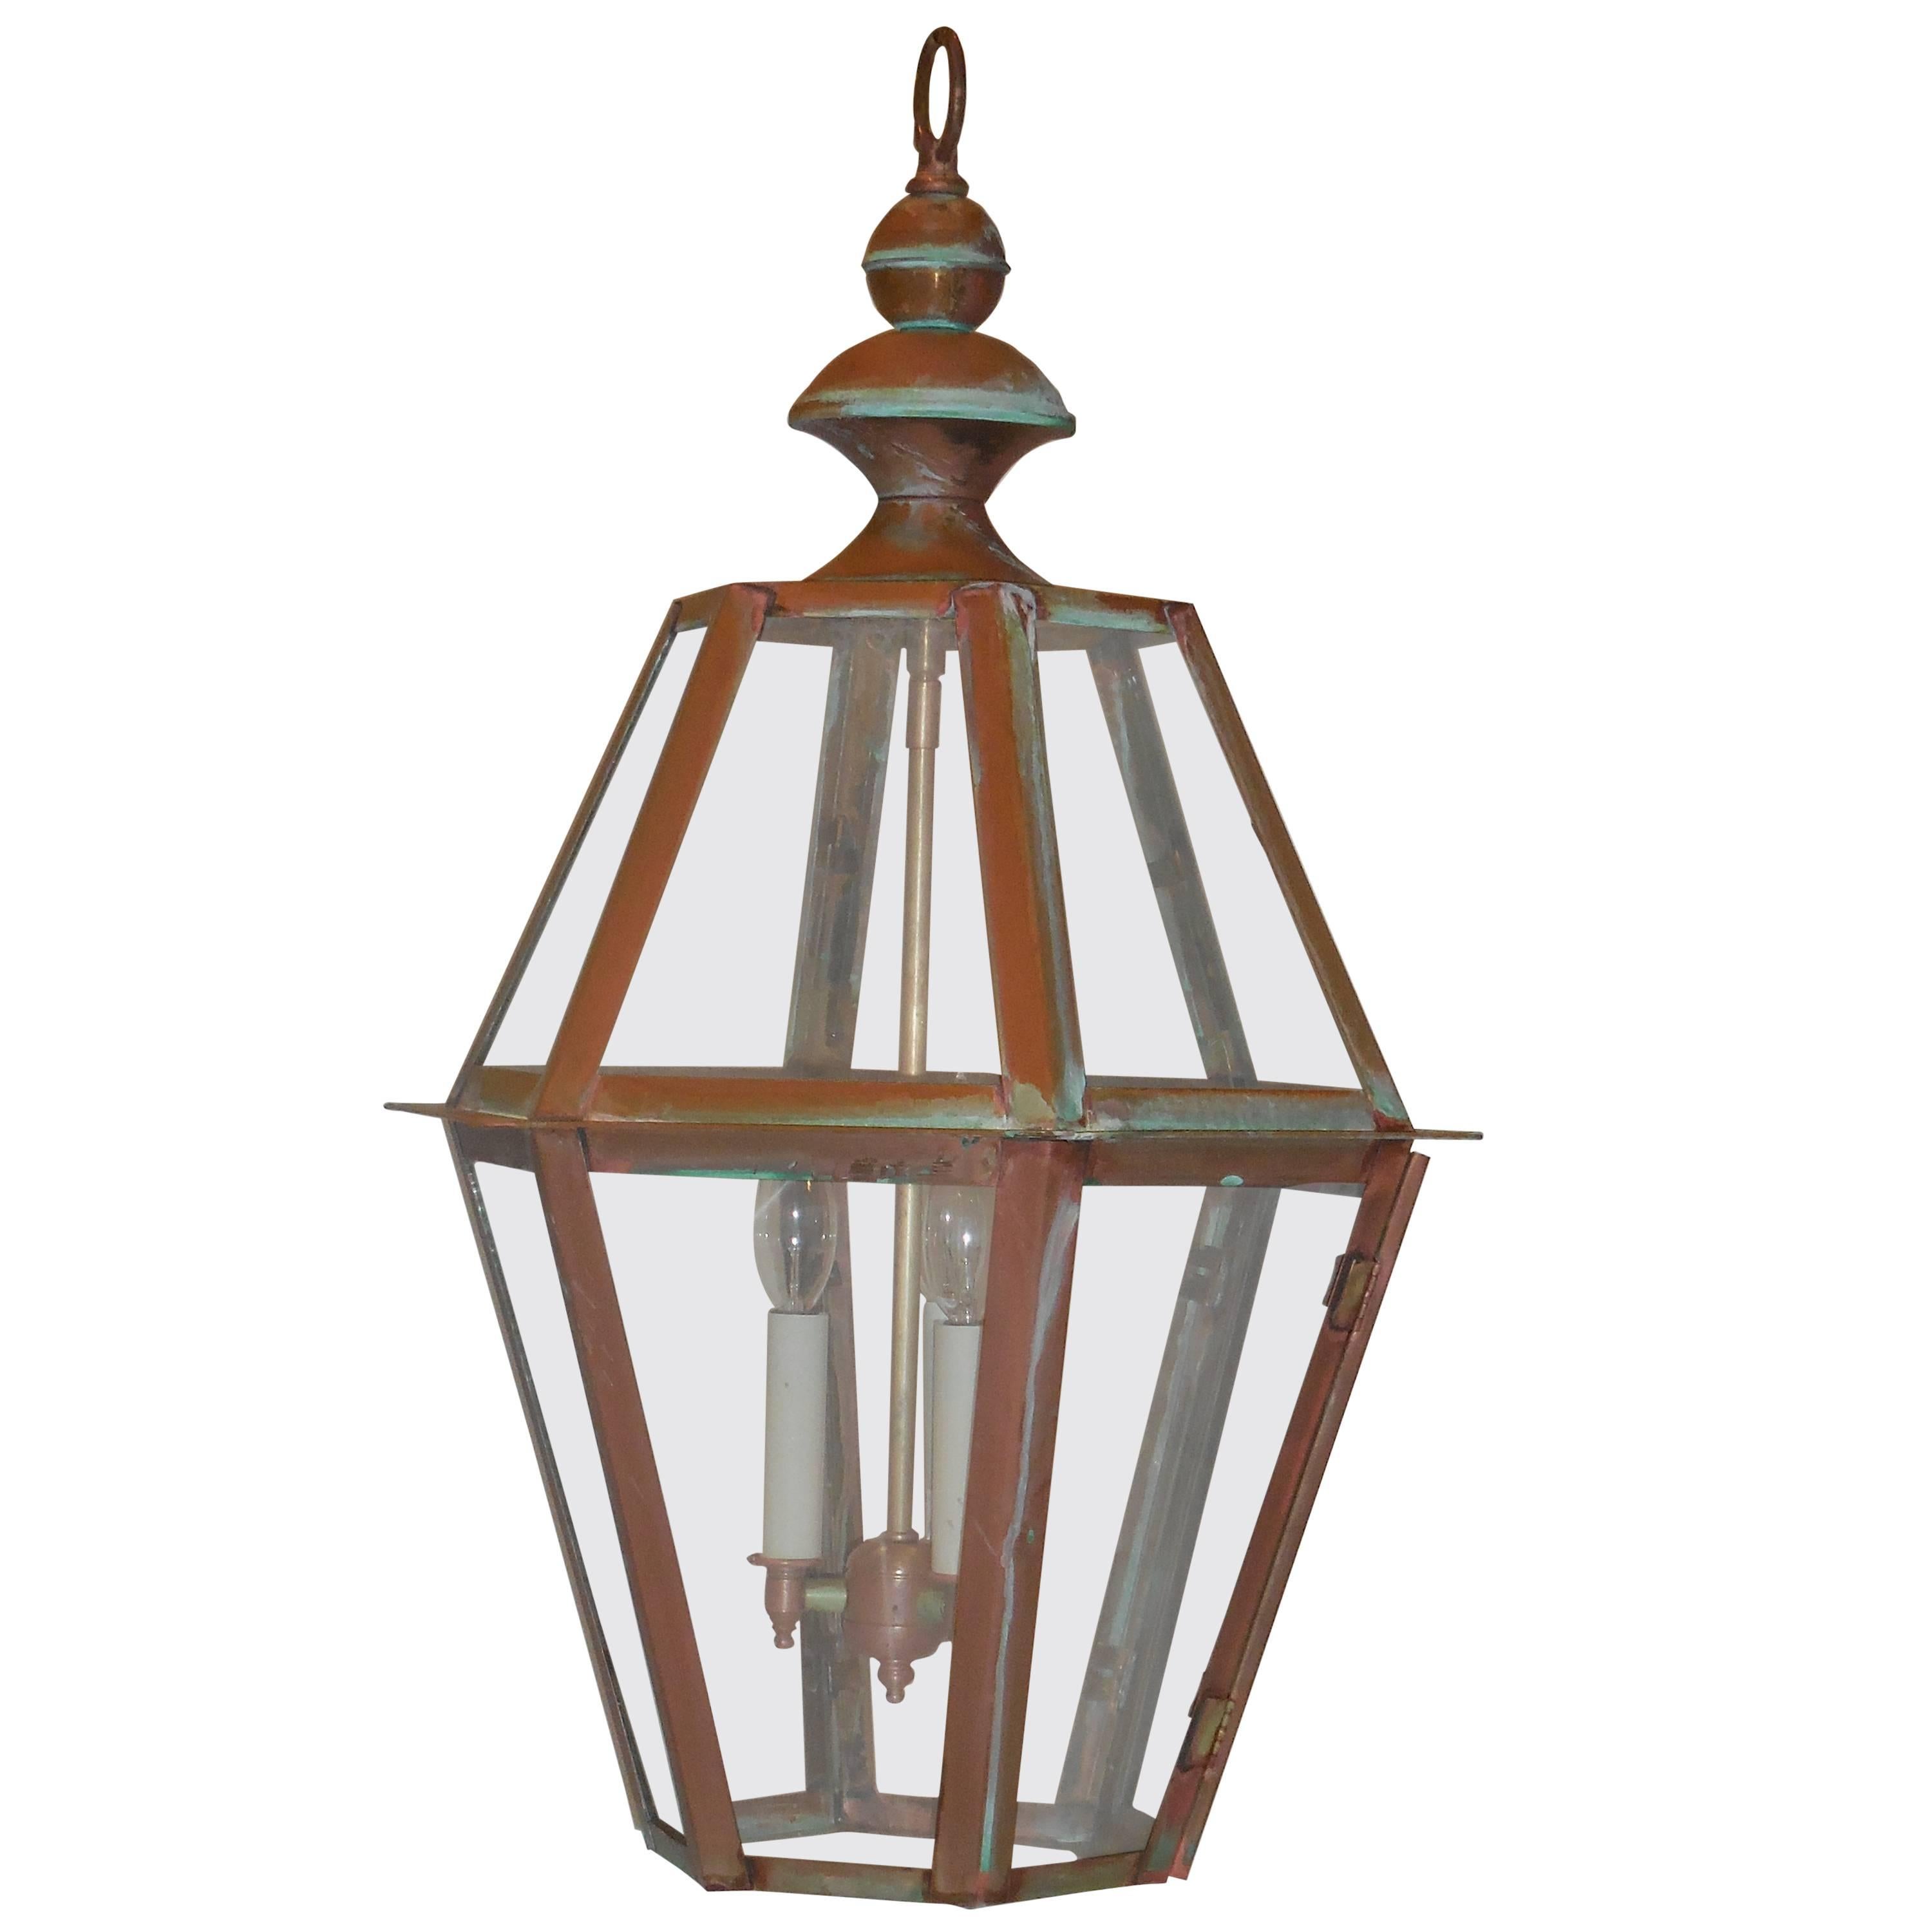 Six-Sided Copper Lantern